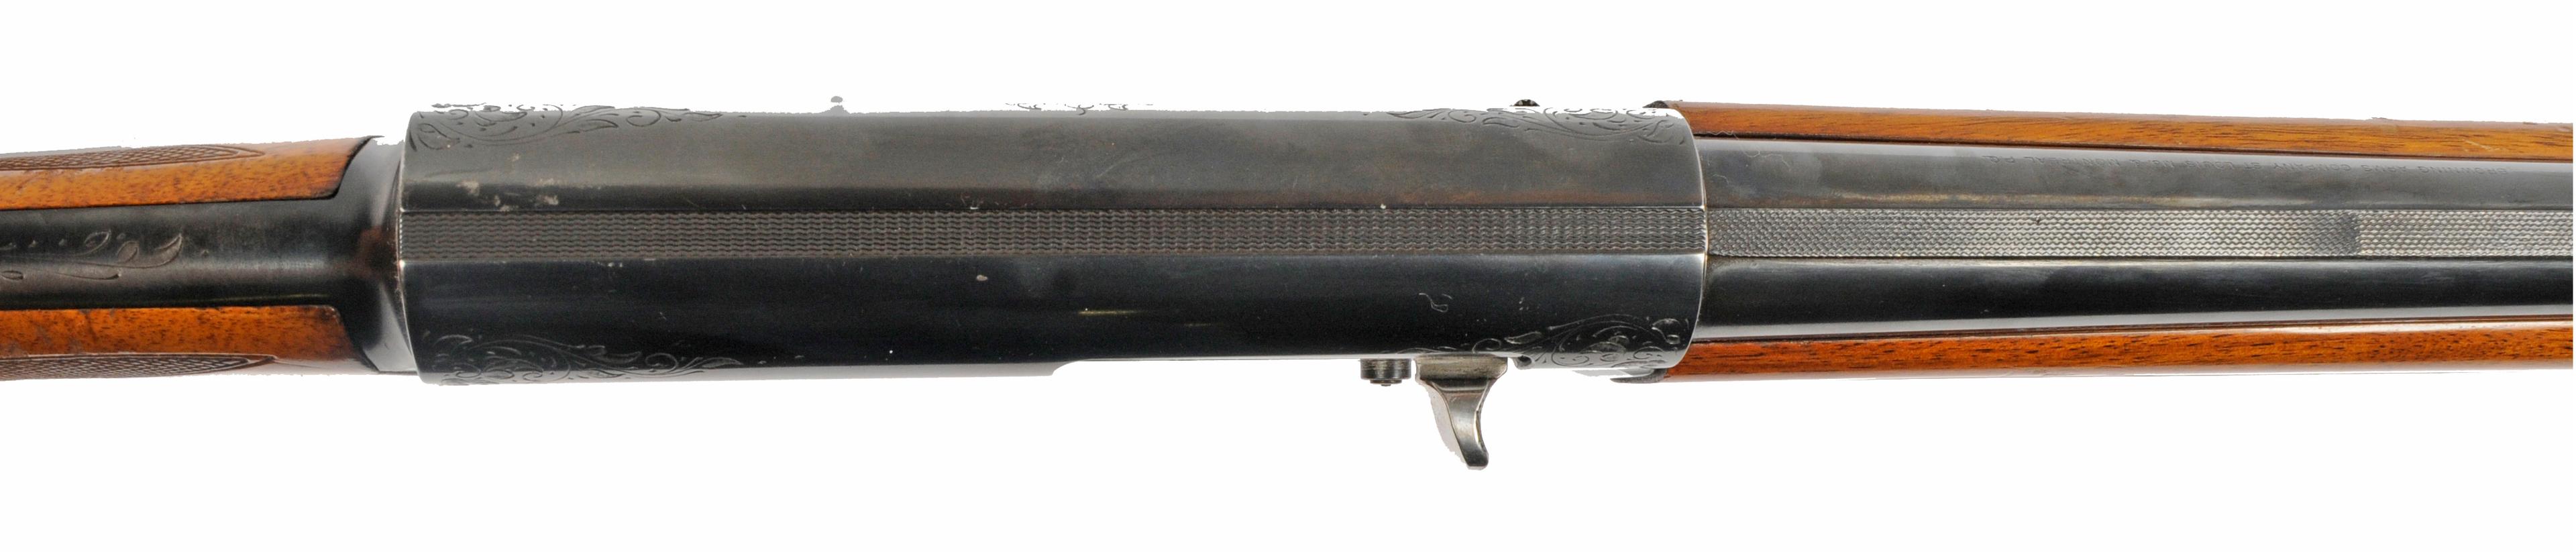 Browning 'Light Twelve' 12 Ga Semi-Automatic Shotgun - FFL#68G-41675 (JWR1)